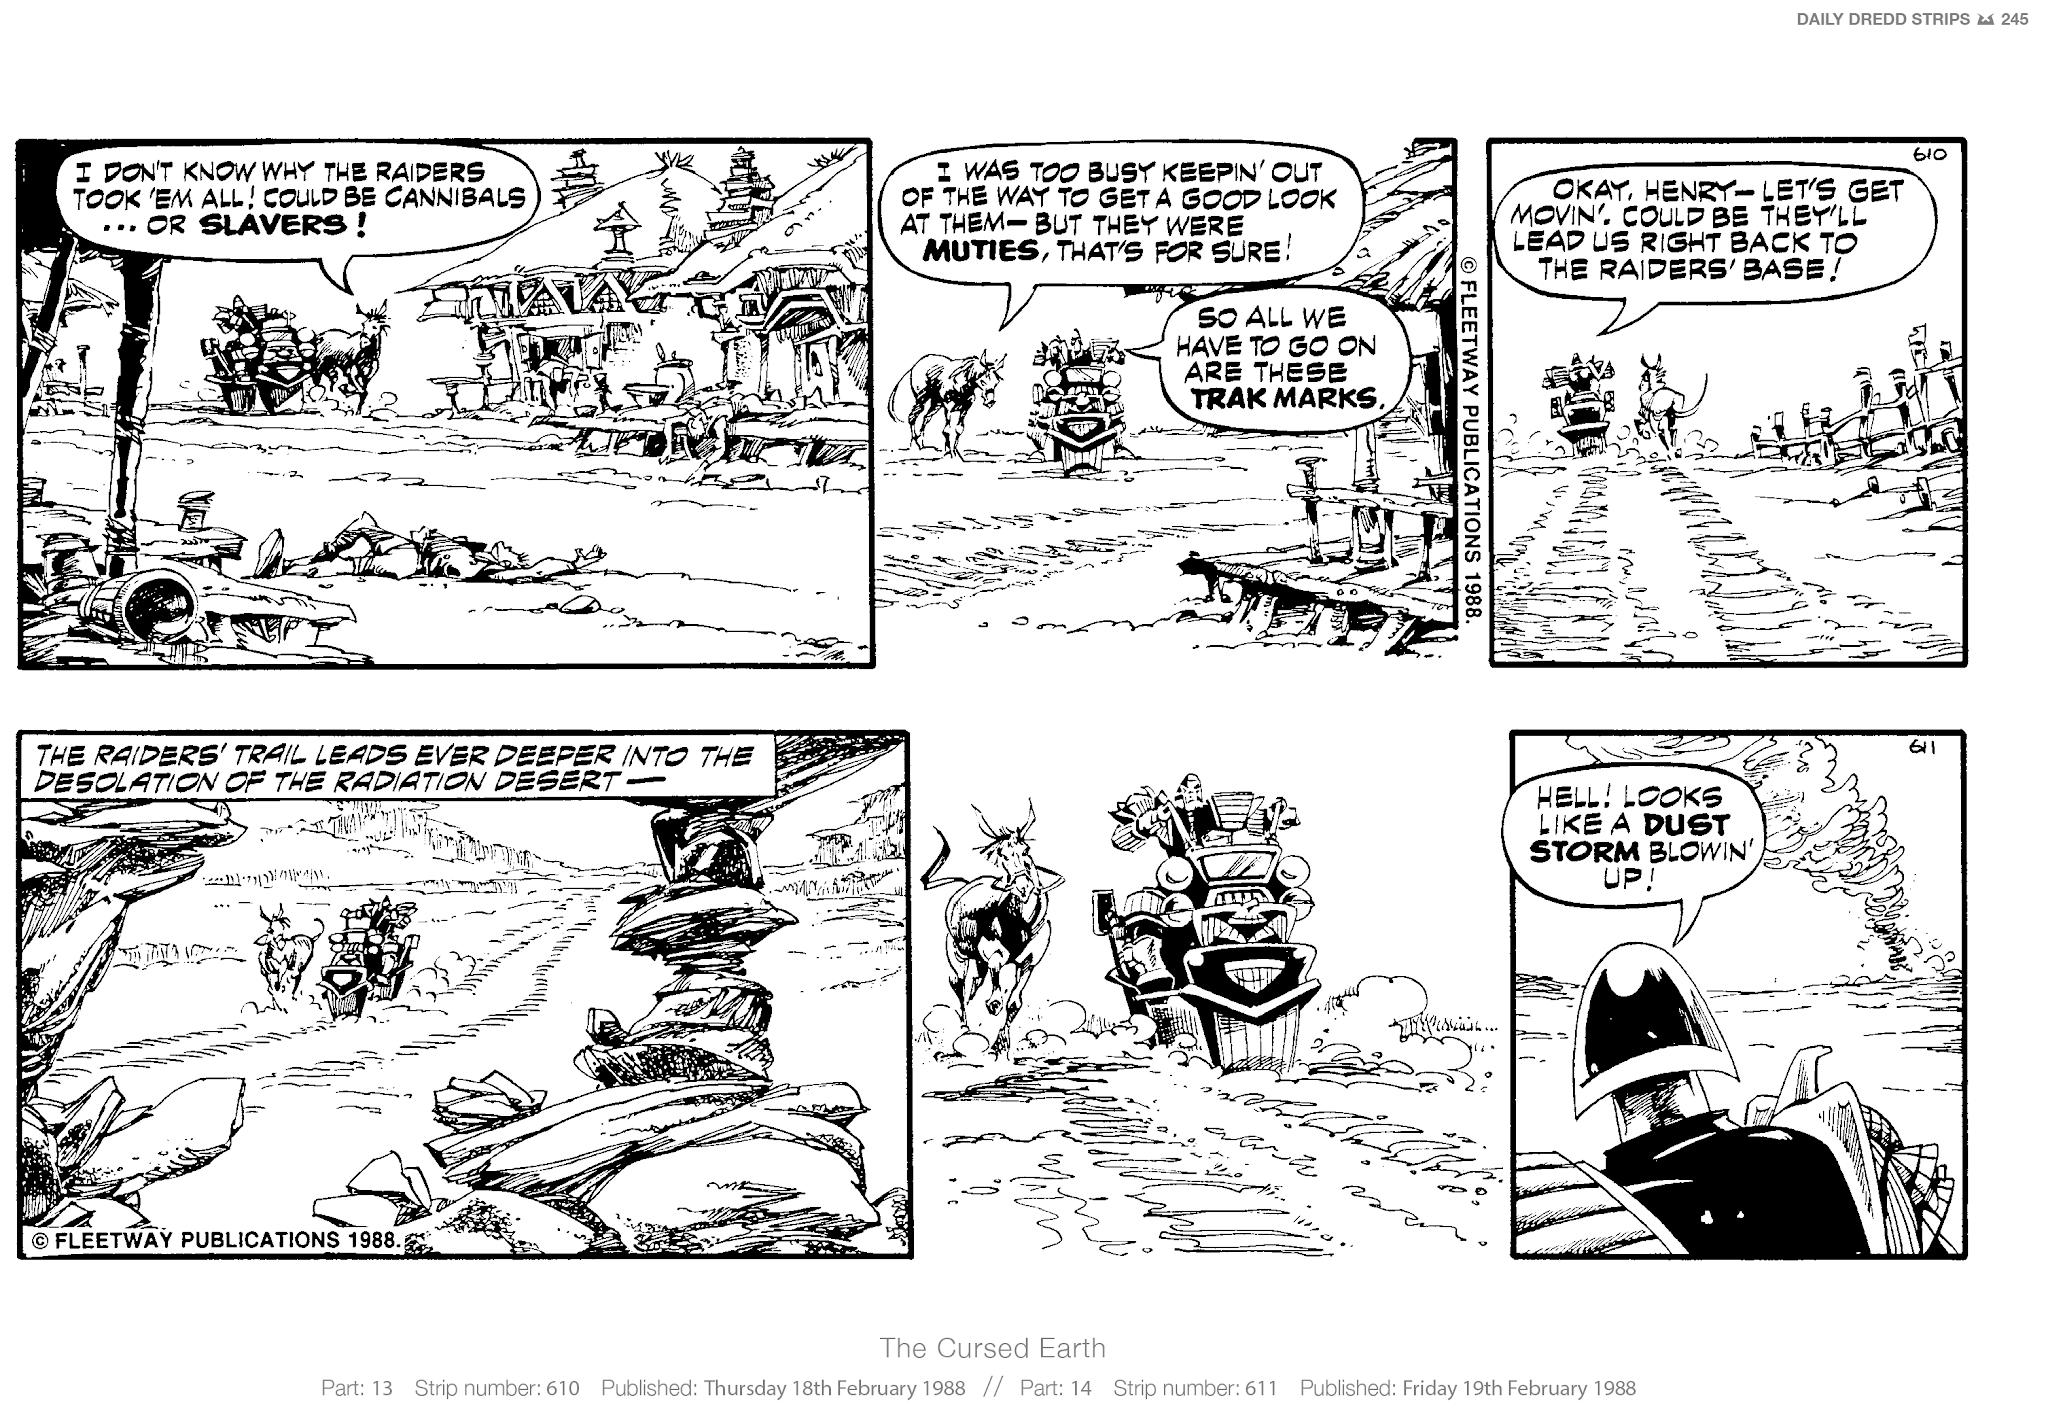 Read online Judge Dredd: The Daily Dredds comic -  Issue # TPB 2 - 248